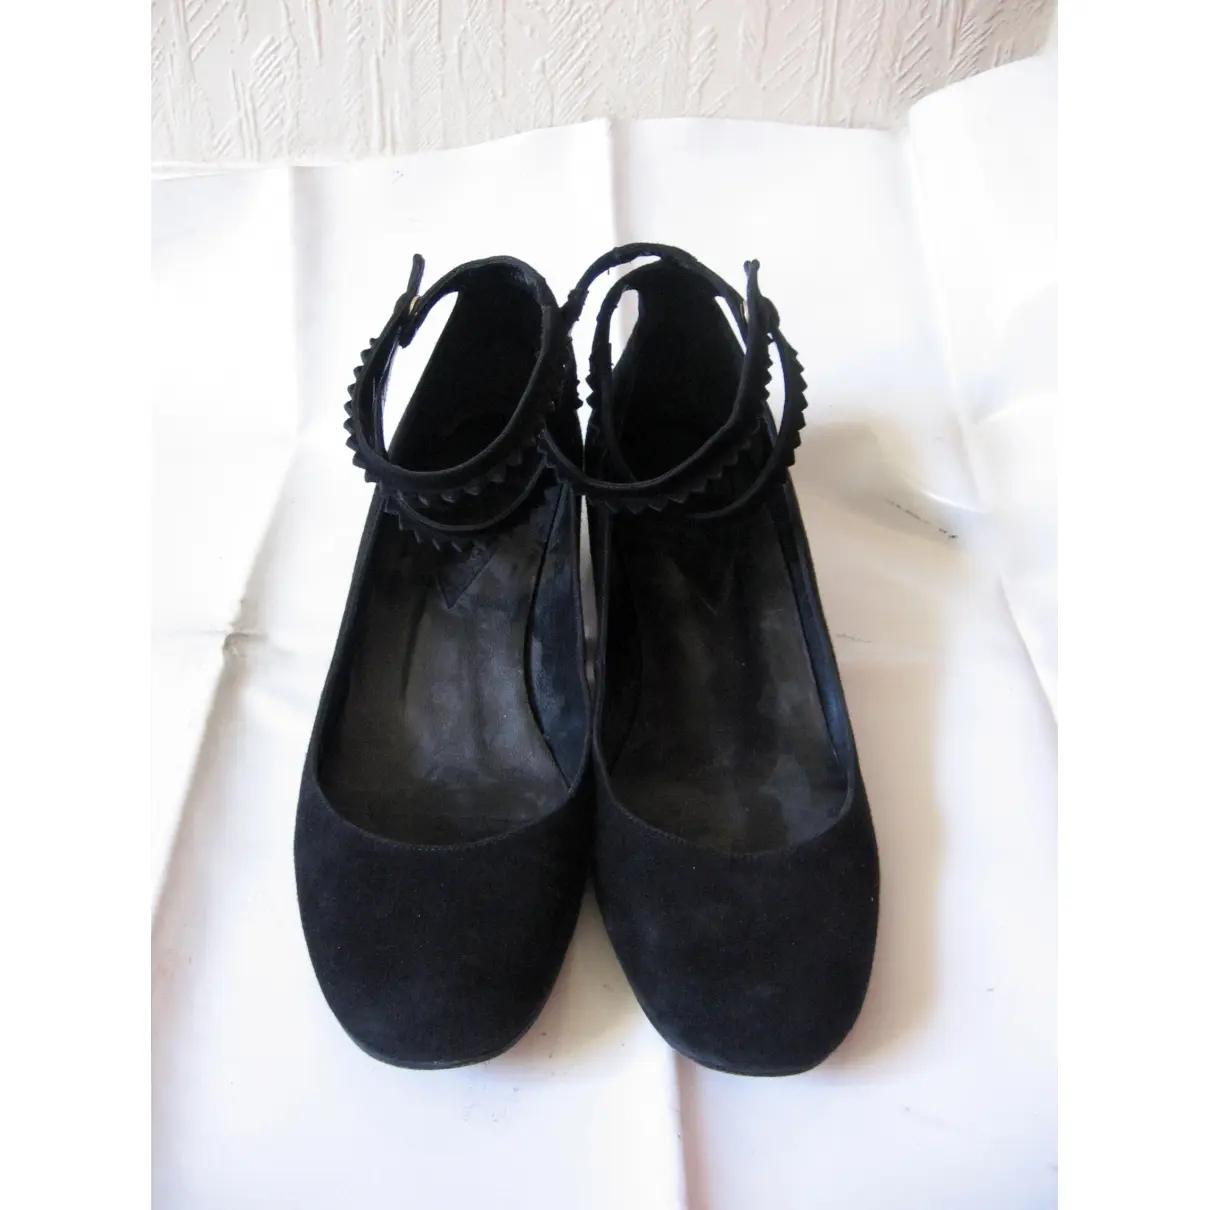 Karine Arabian Leather heels for sale